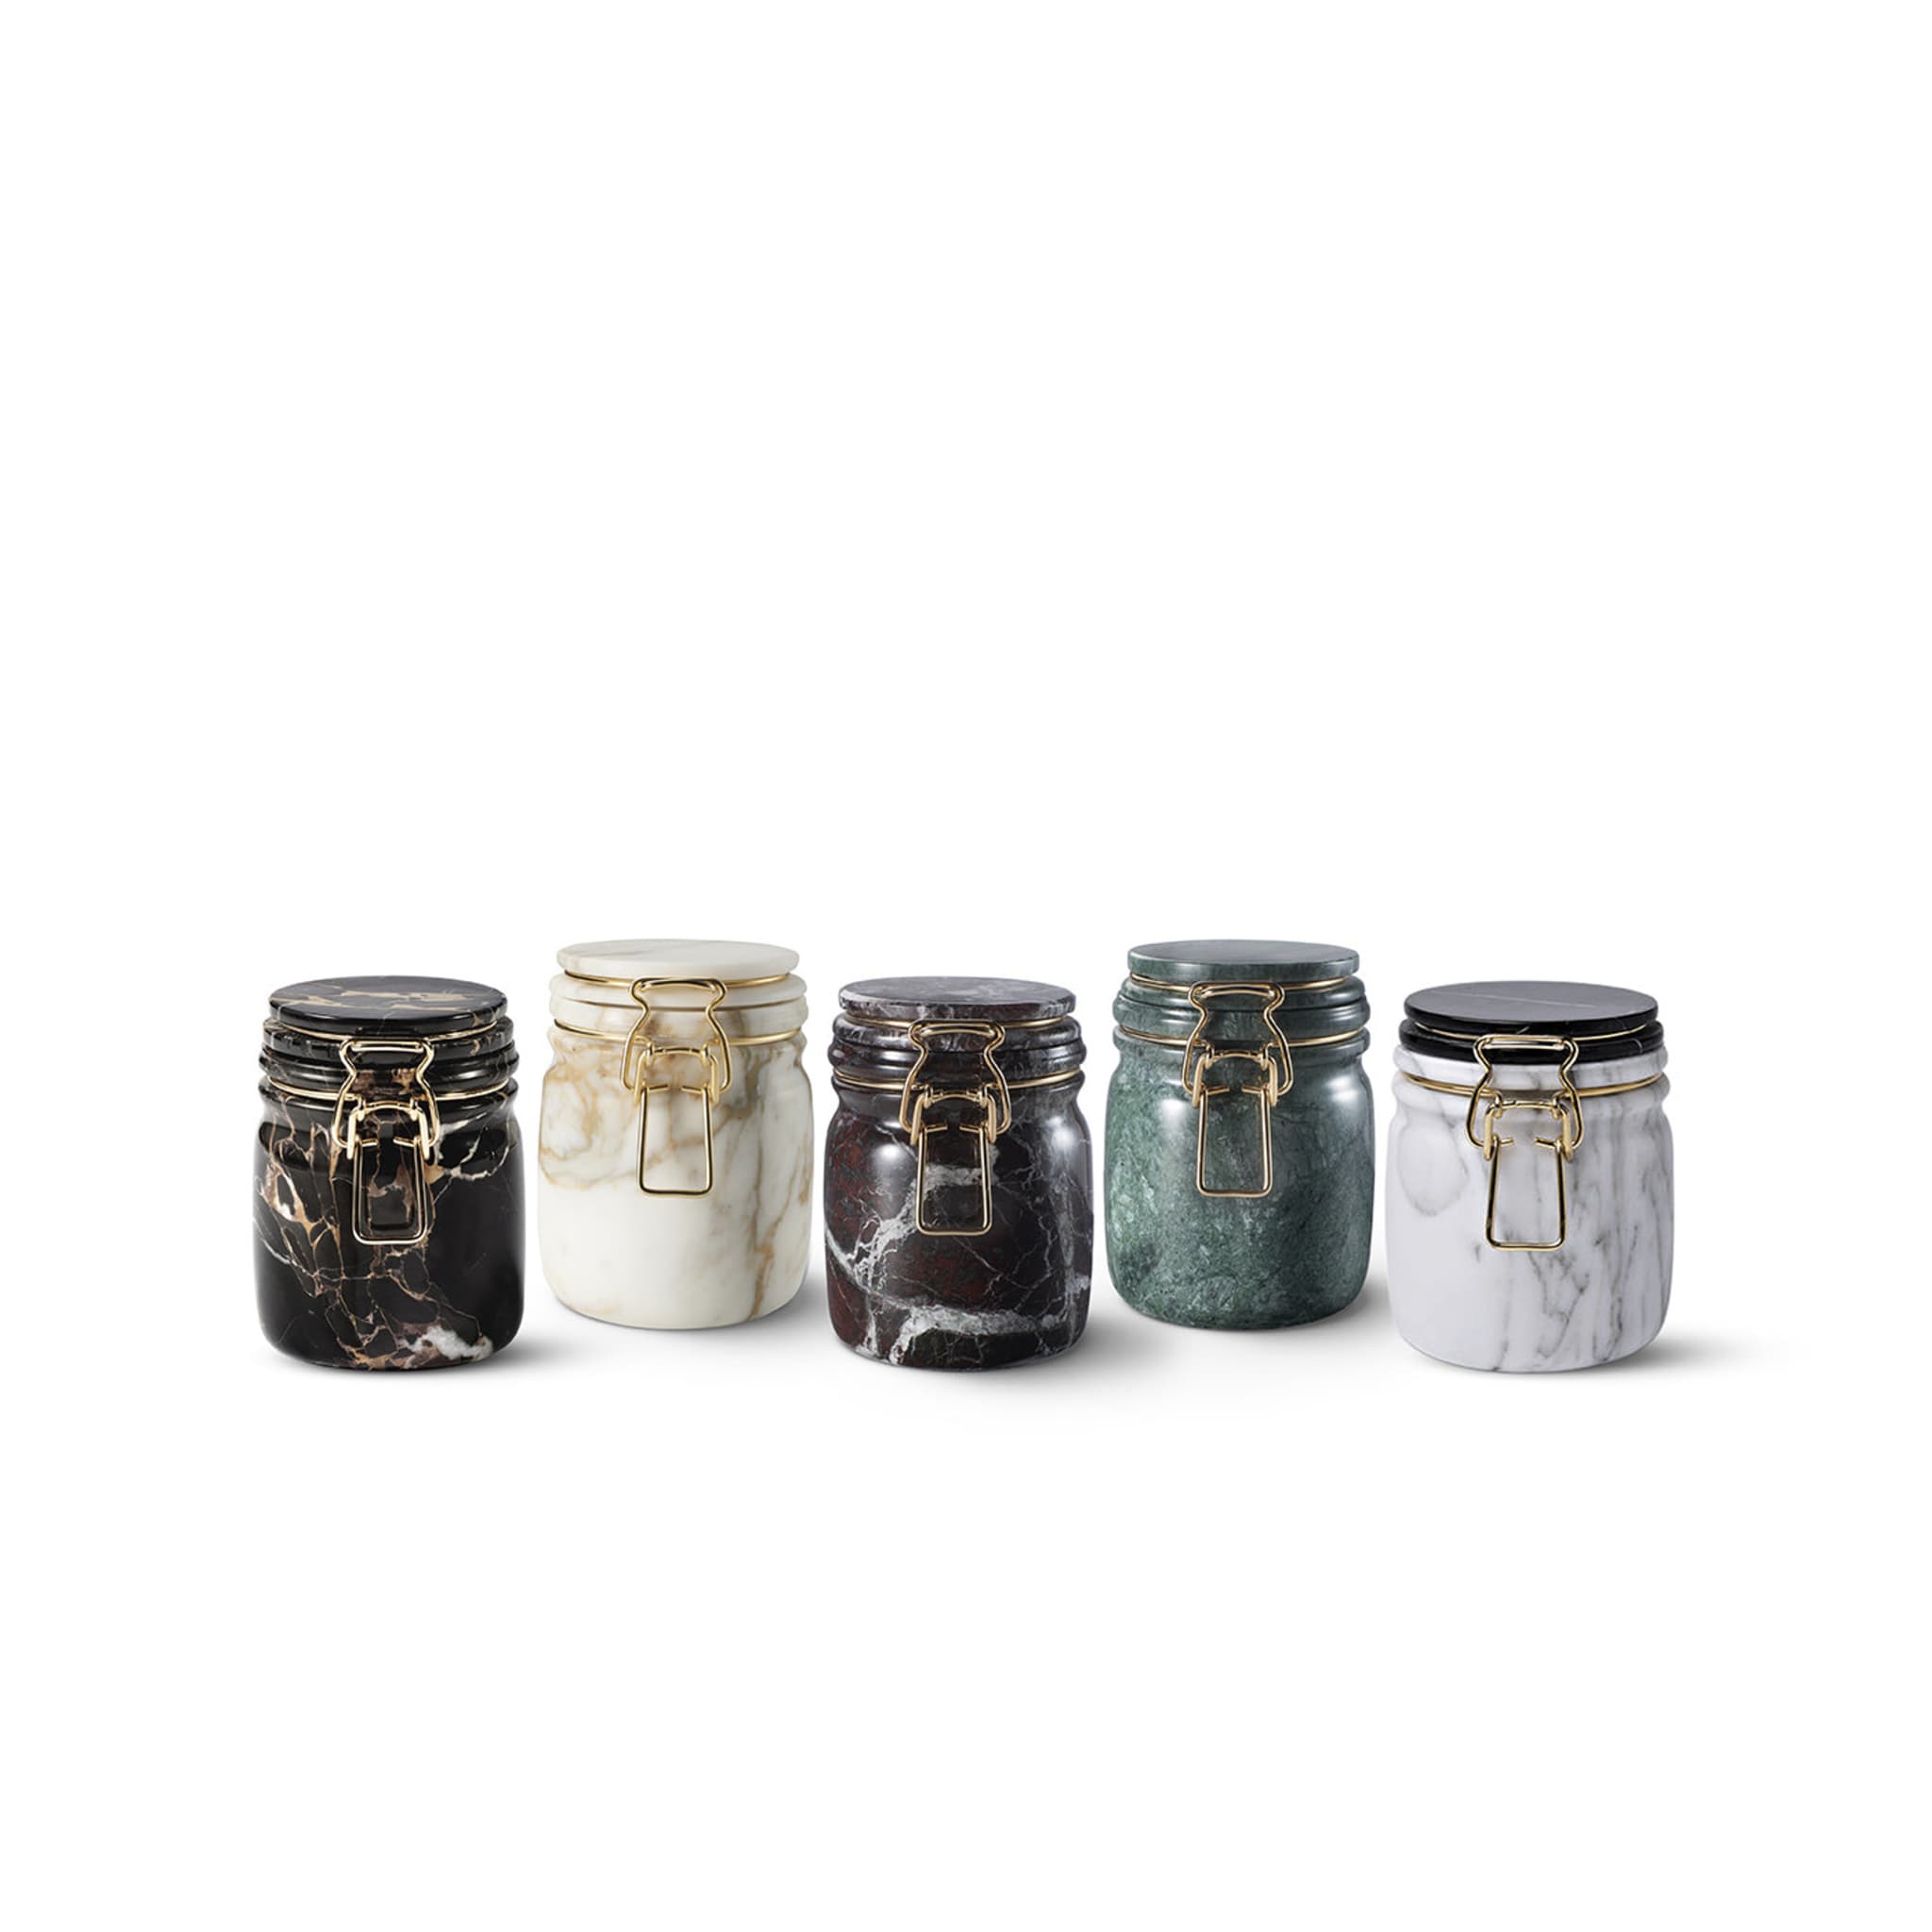 Miss Marble Jar in Calacatta Marble by Lorenza Bozzoli - Alternative view 1